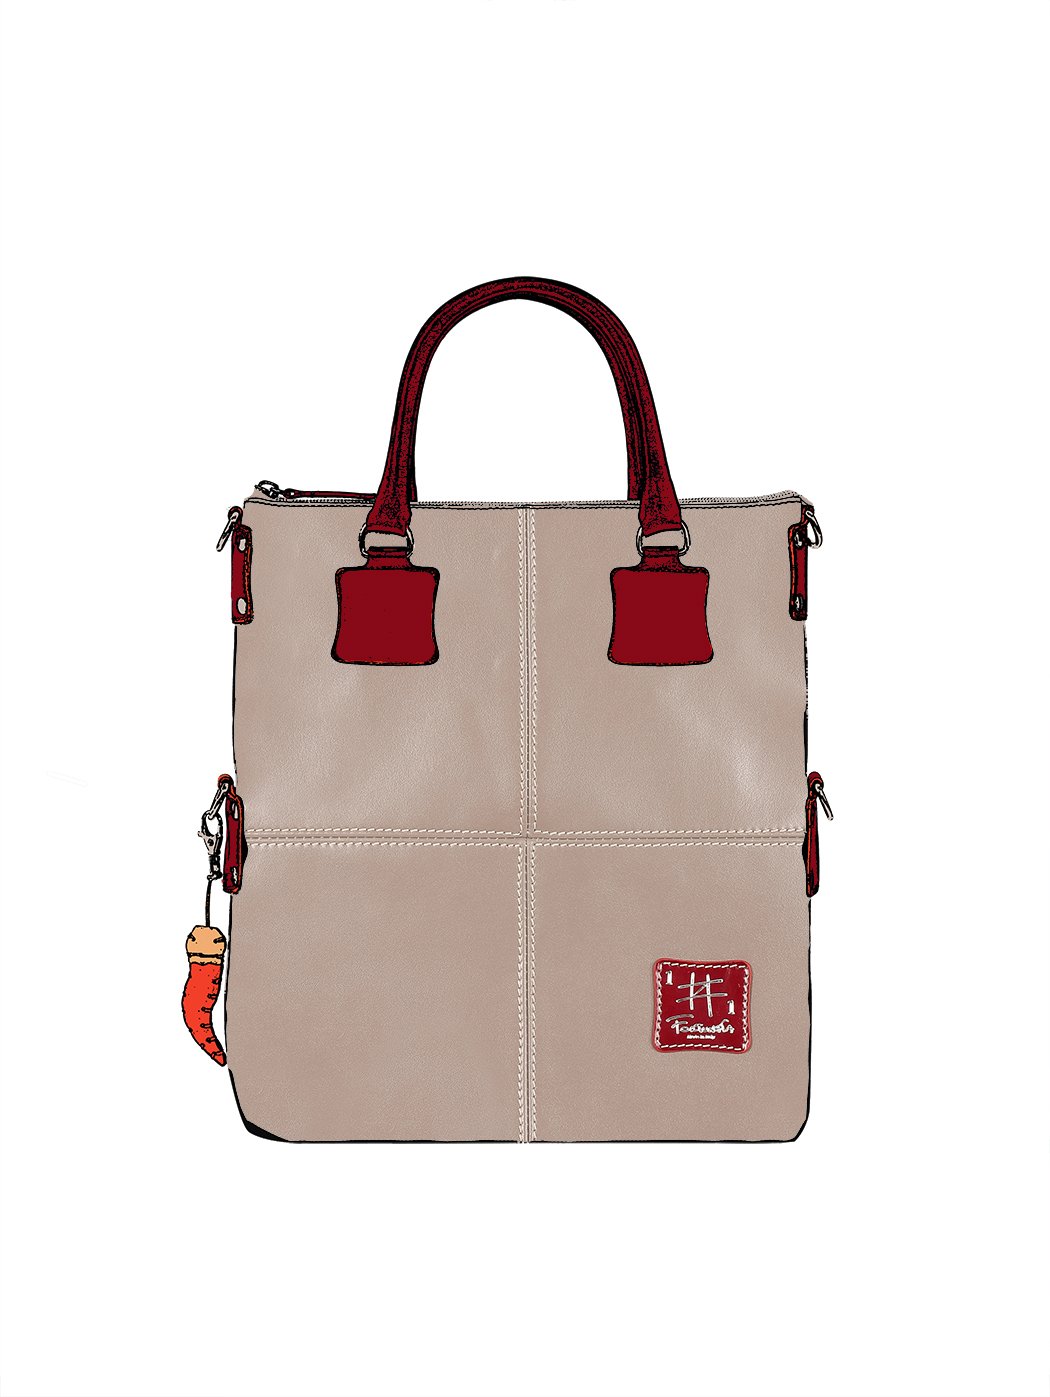 Leather Handbag in beige color - Limited Edition